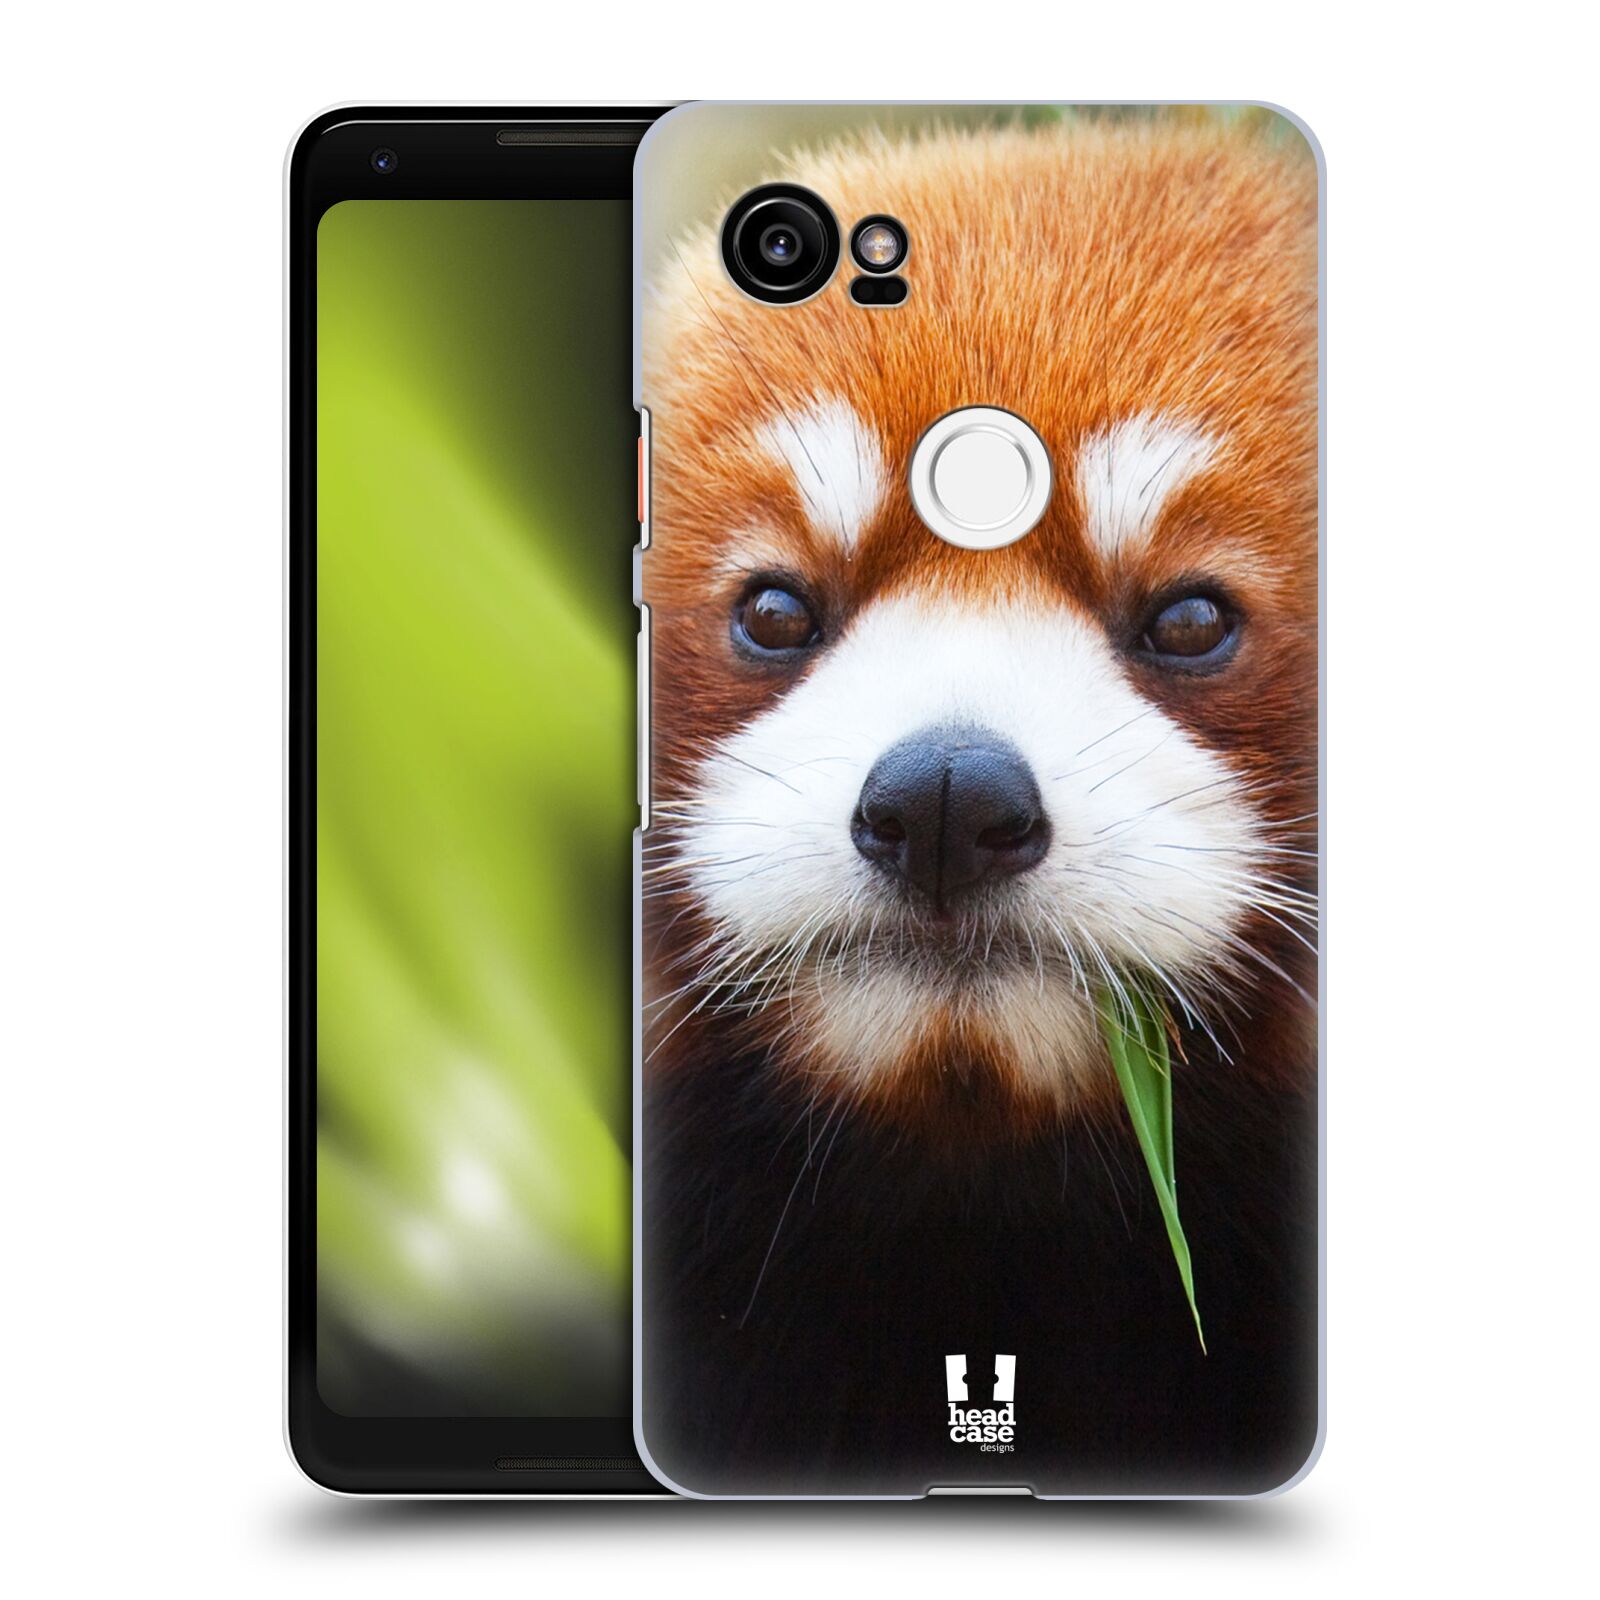 HEAD CASE plastový obal na mobil Google Pixel 2 XL vzor Divočina, Divoký život a zvířata foto PANDA HNĚDÁ